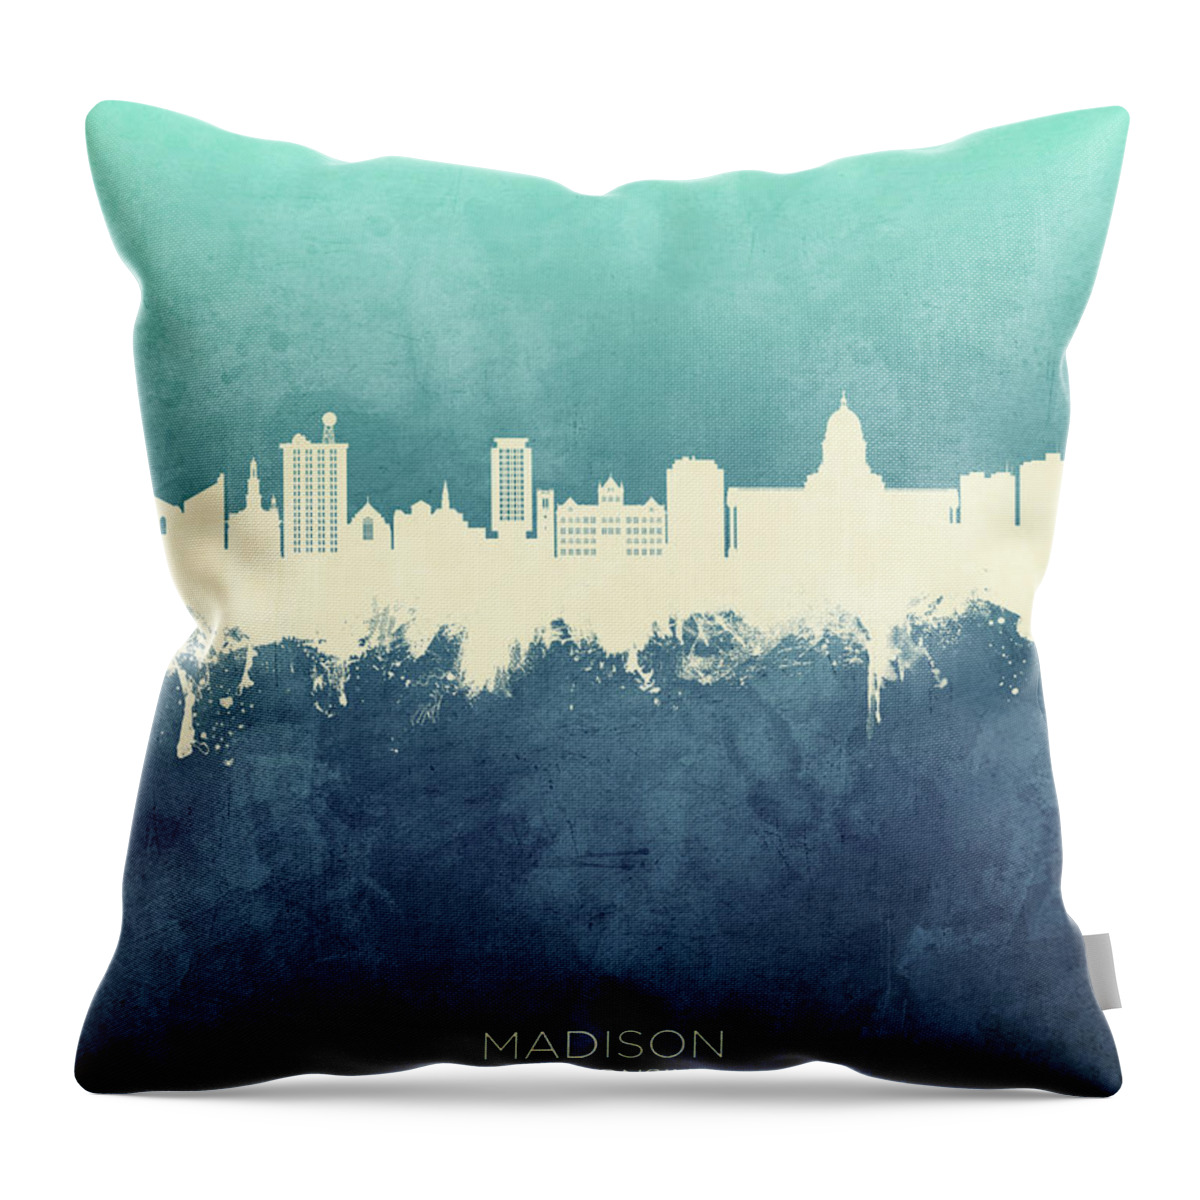 Madison Throw Pillow featuring the digital art Madison Wisconsin Skyline by Michael Tompsett